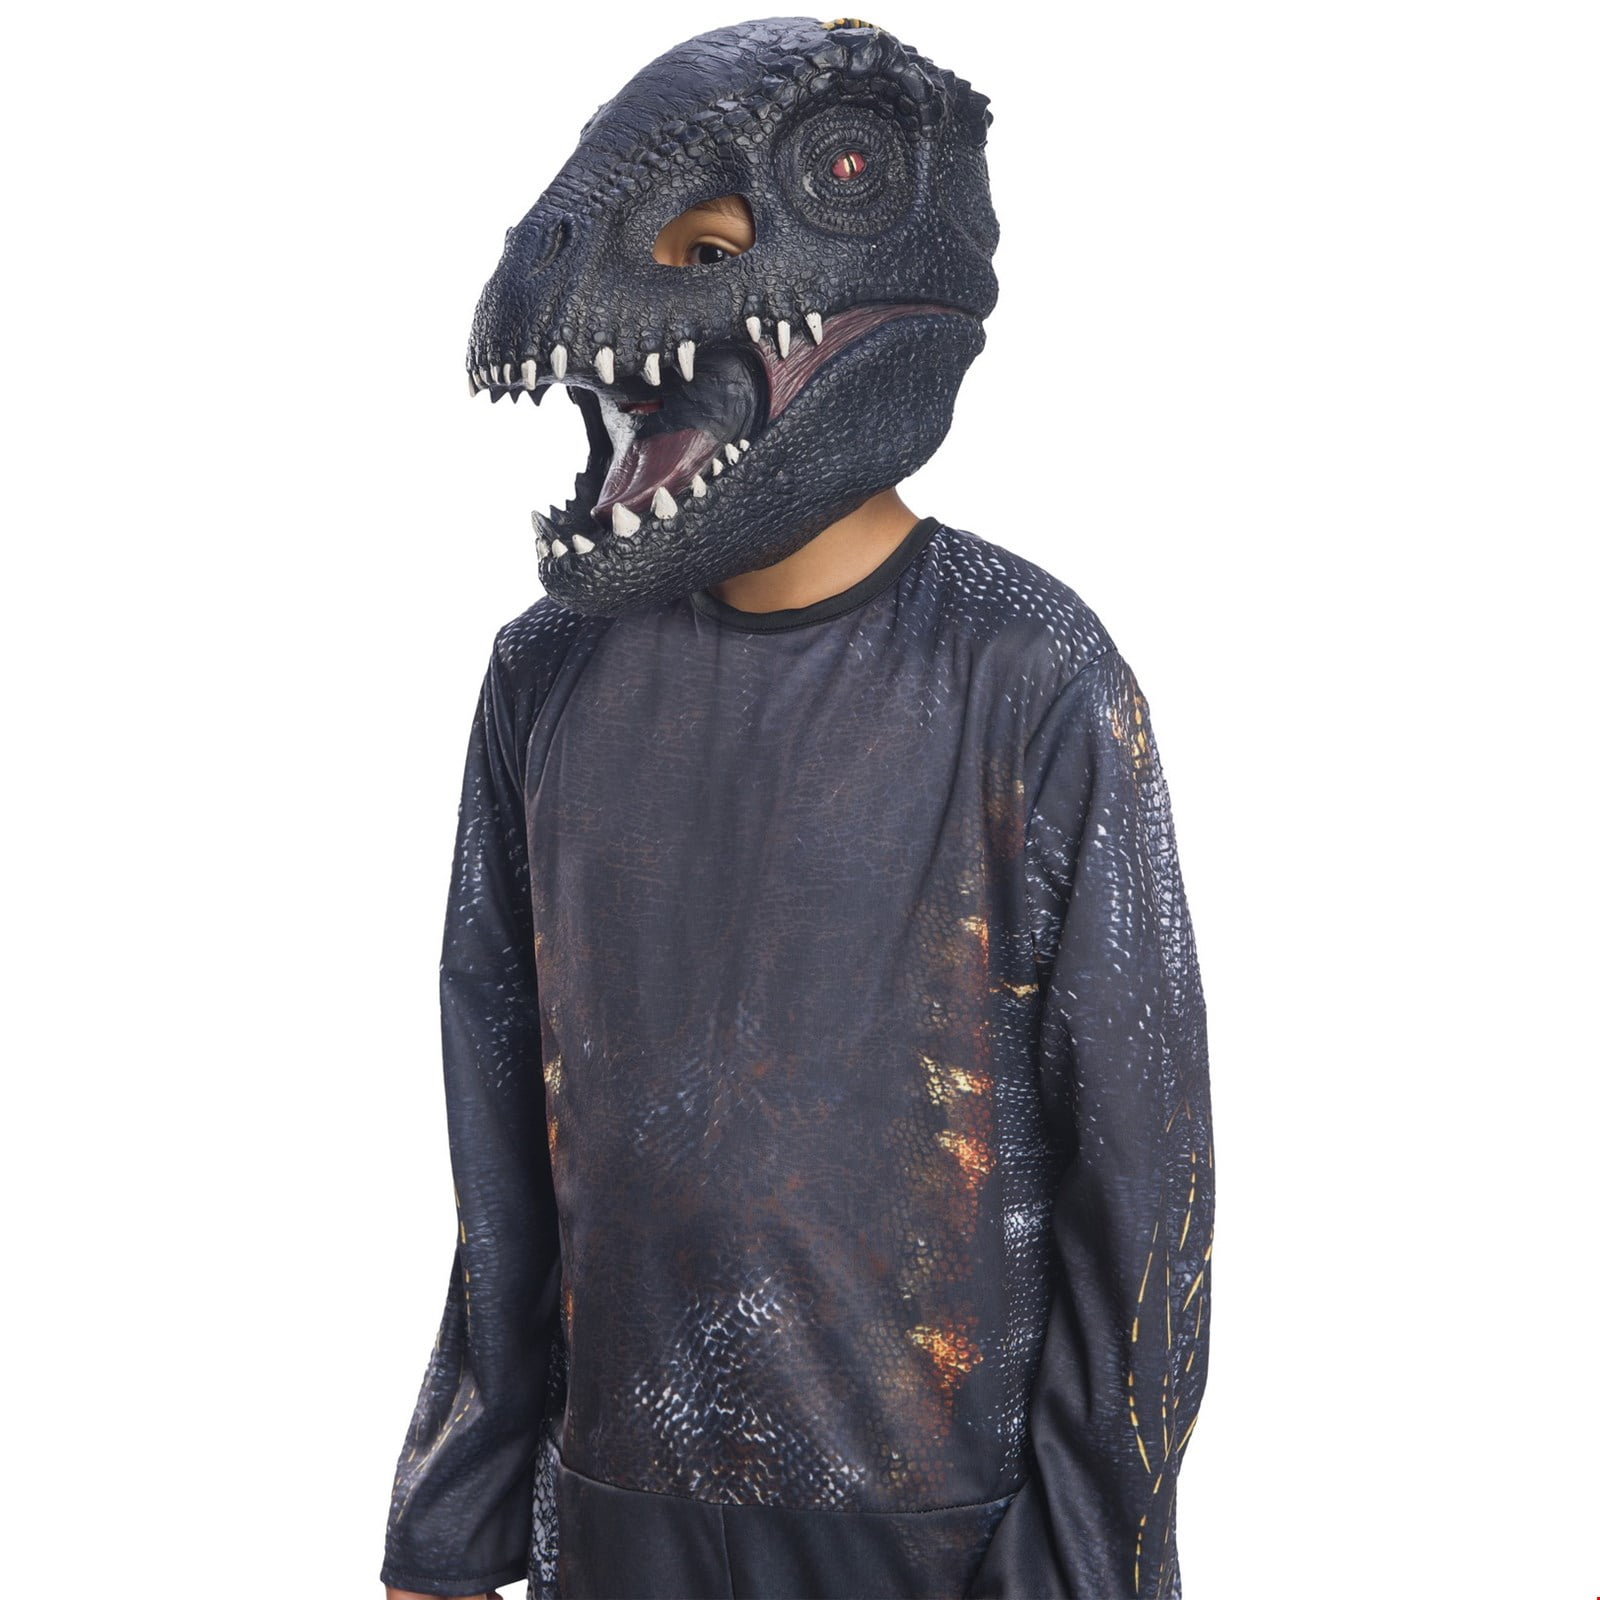 Jurassic World Fallen Kingdom Villain Dinosaur Adult 3 4 Mask